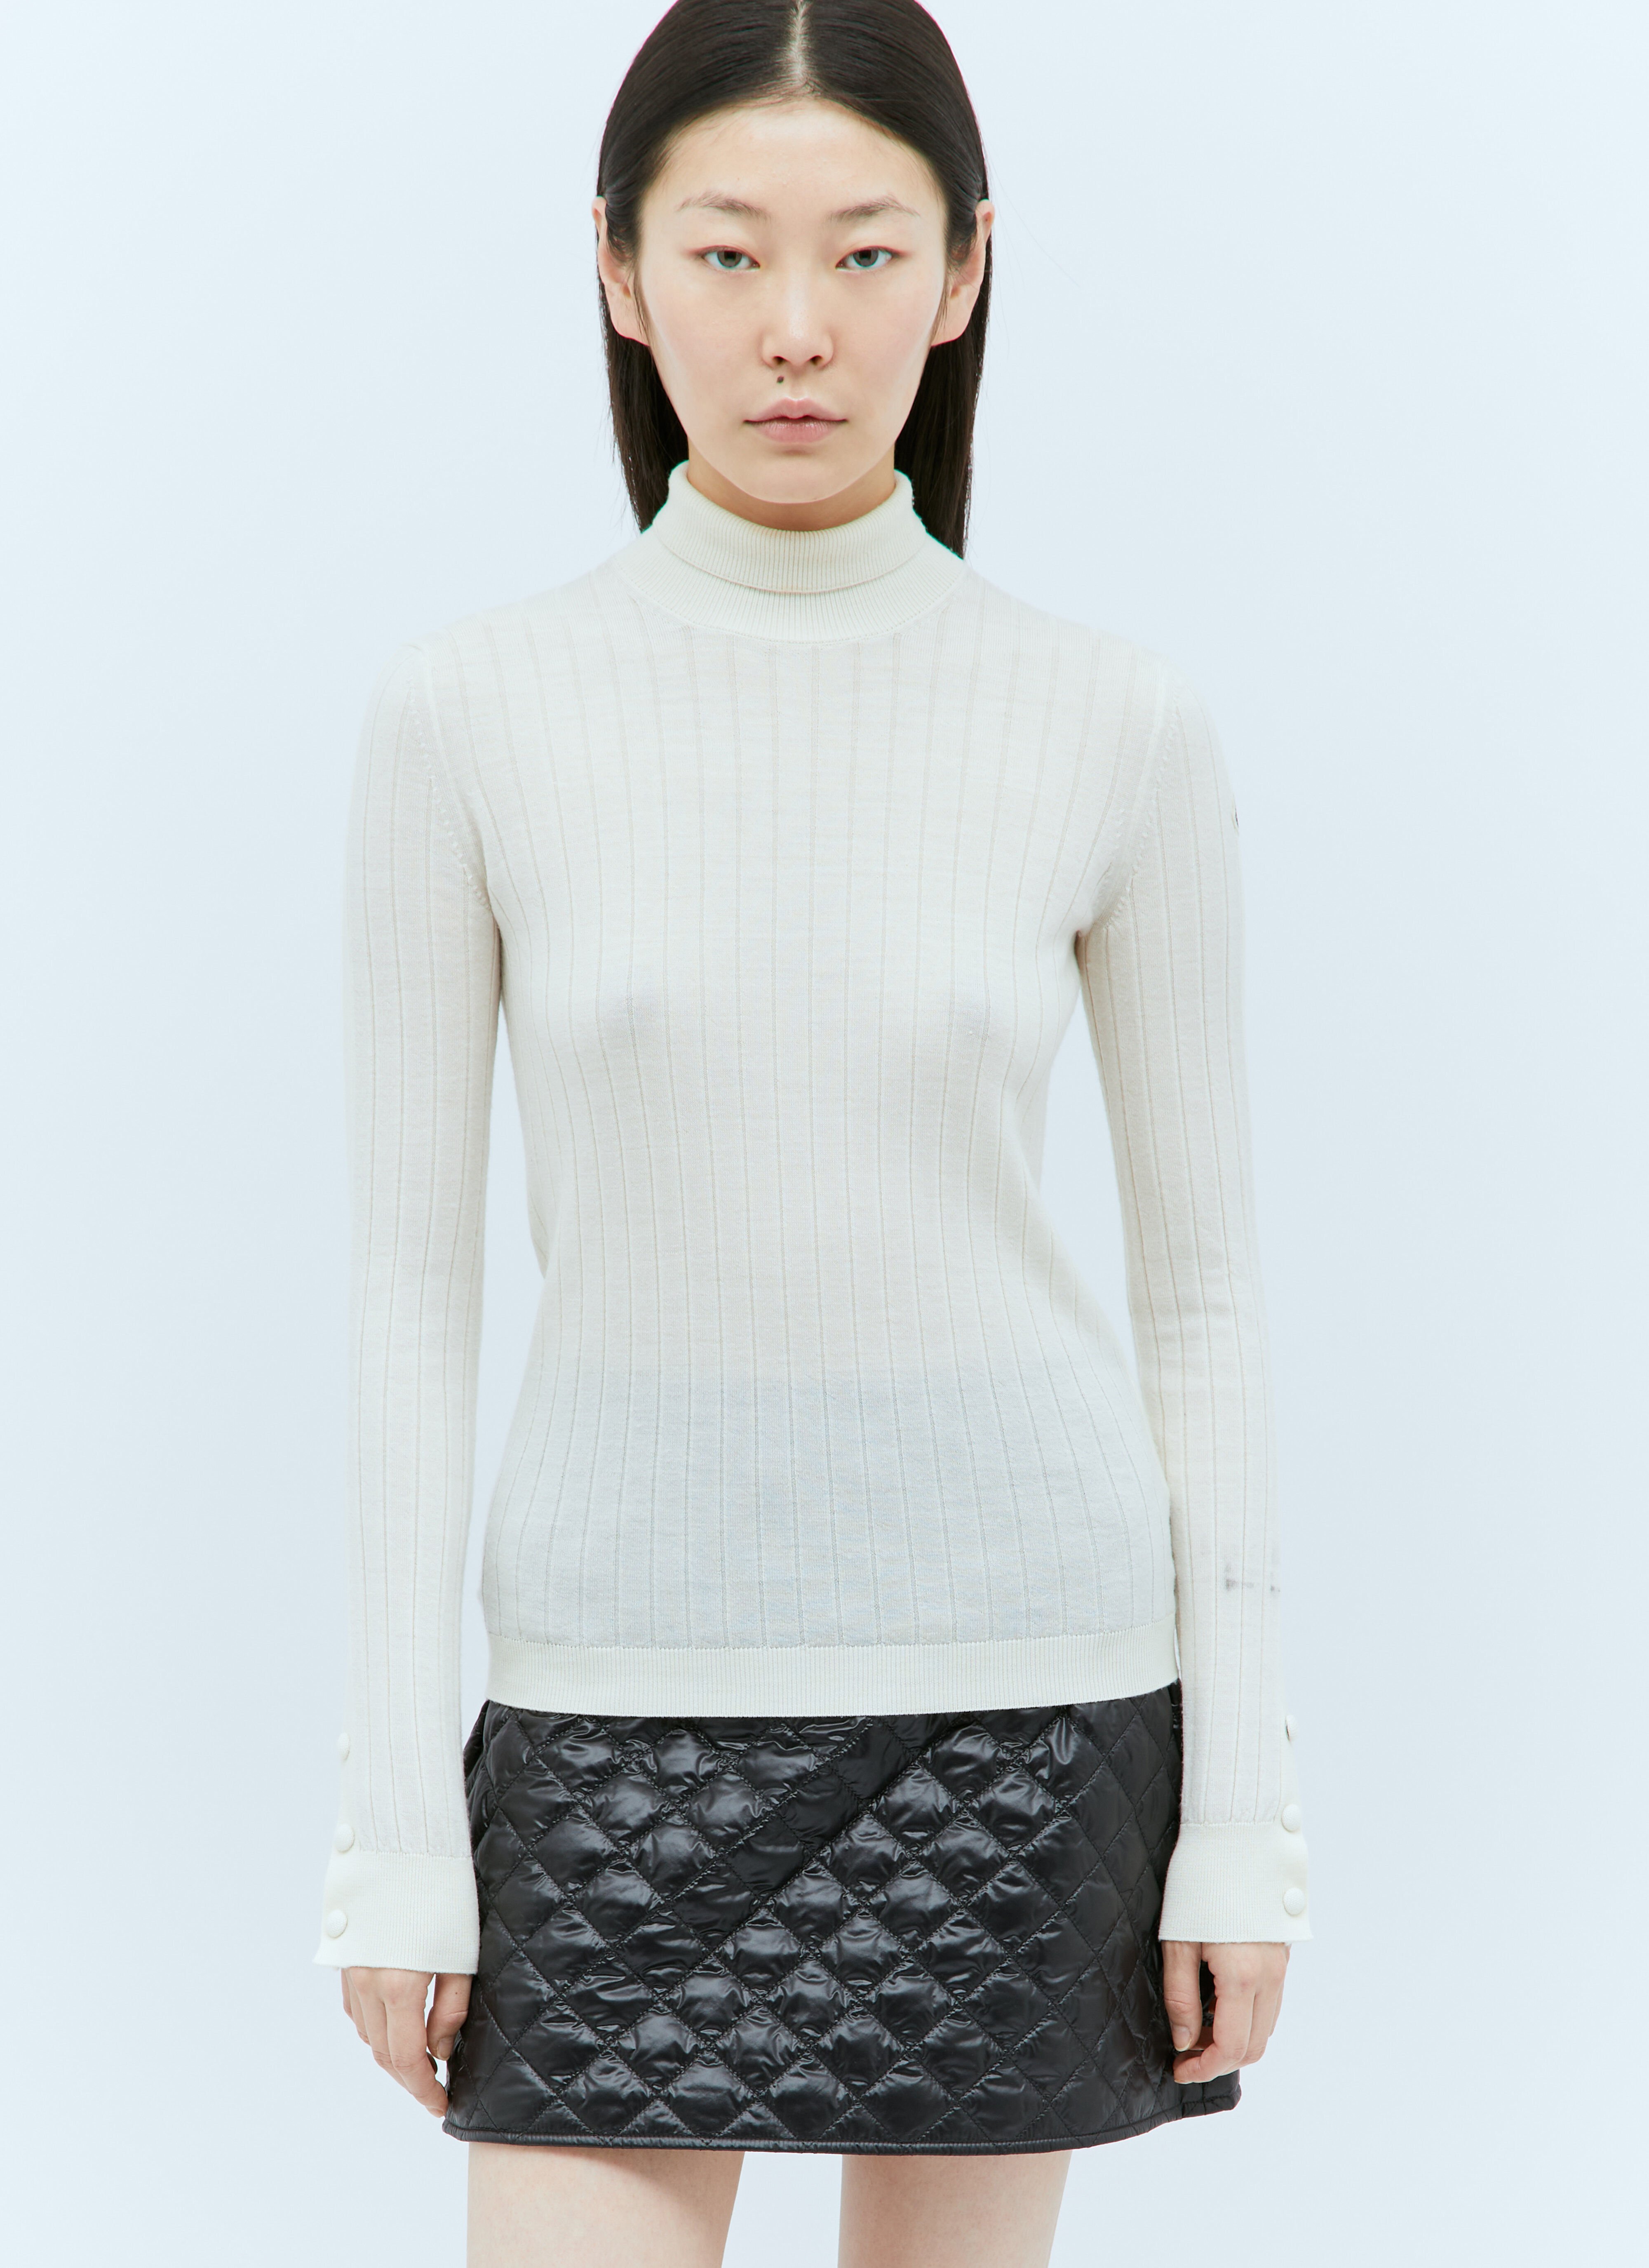 Jean Paul Gaultier Wool And Cashmere Sweater Black jpg0258007